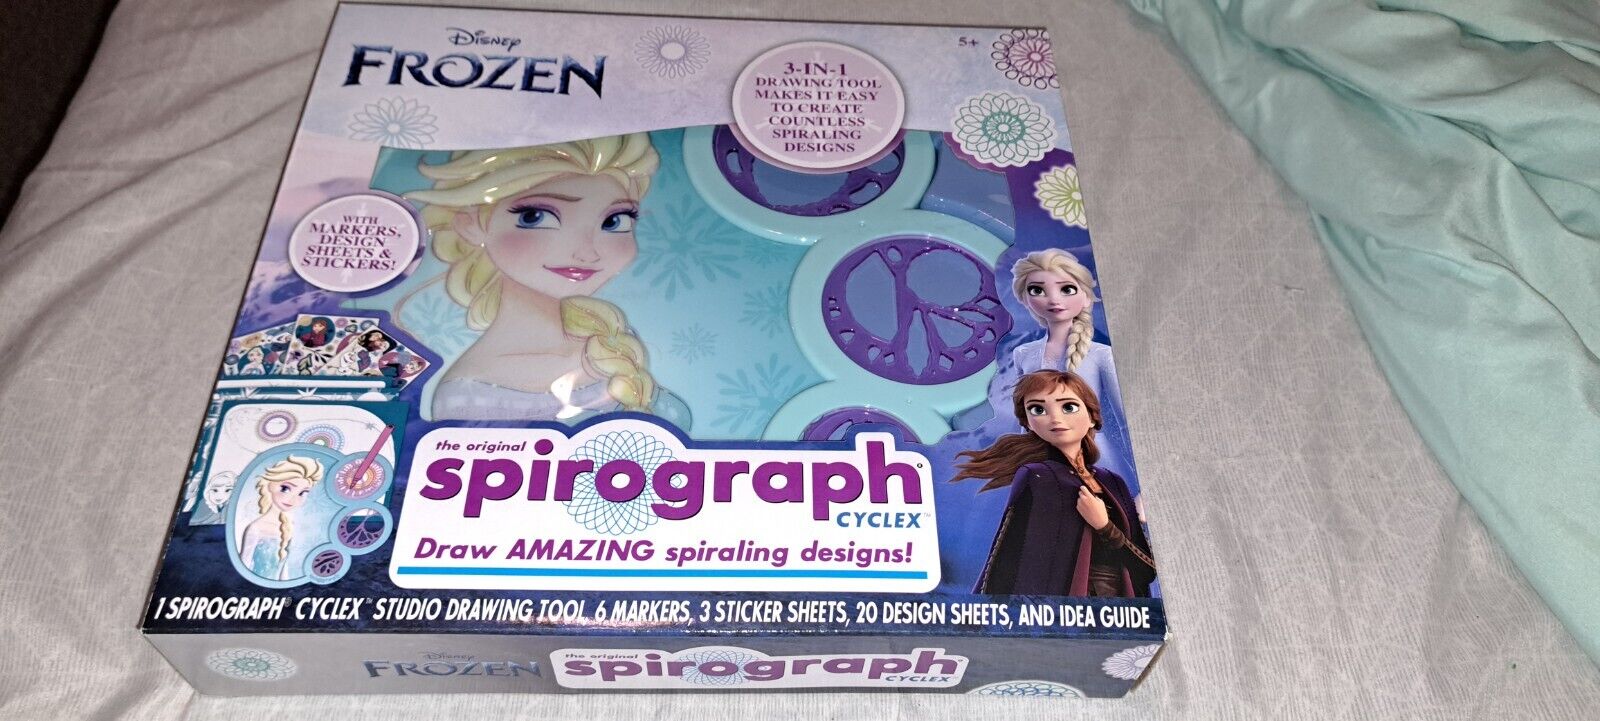 Spirograph Cyclex Studio Elsa - Disney - The Easy Way to Make Countless Amazi...